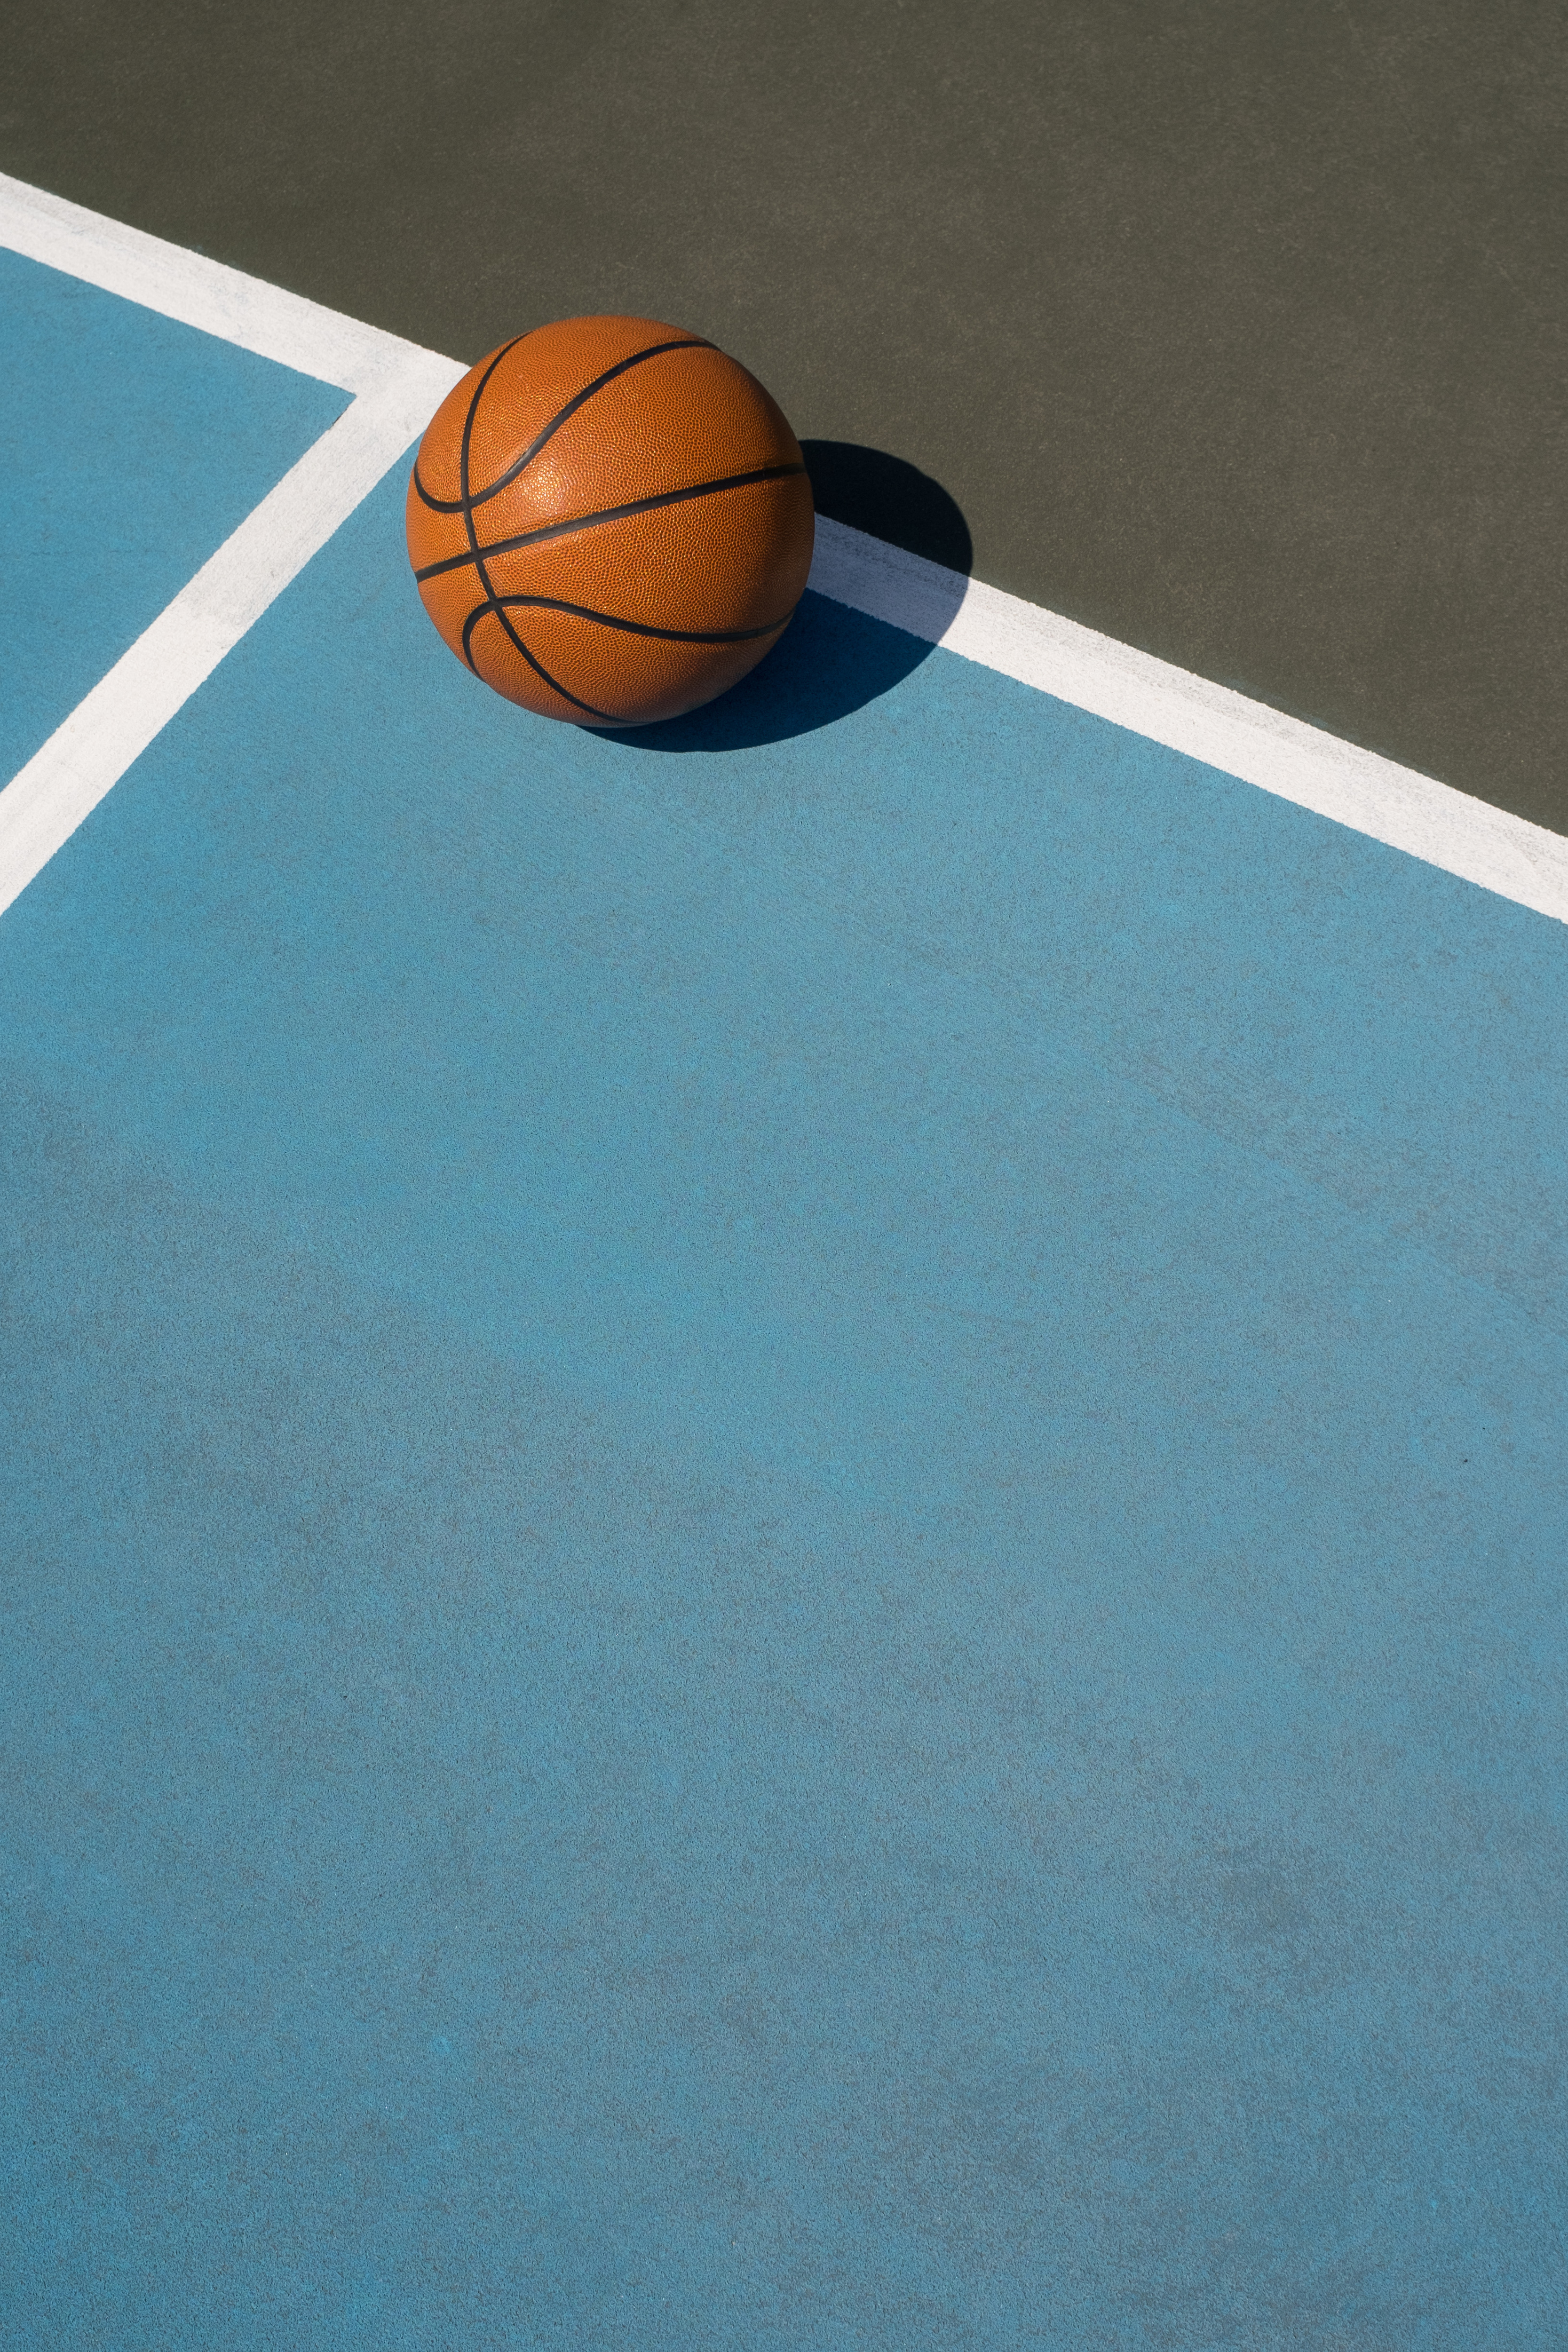 Basketball on outdoor court in sun